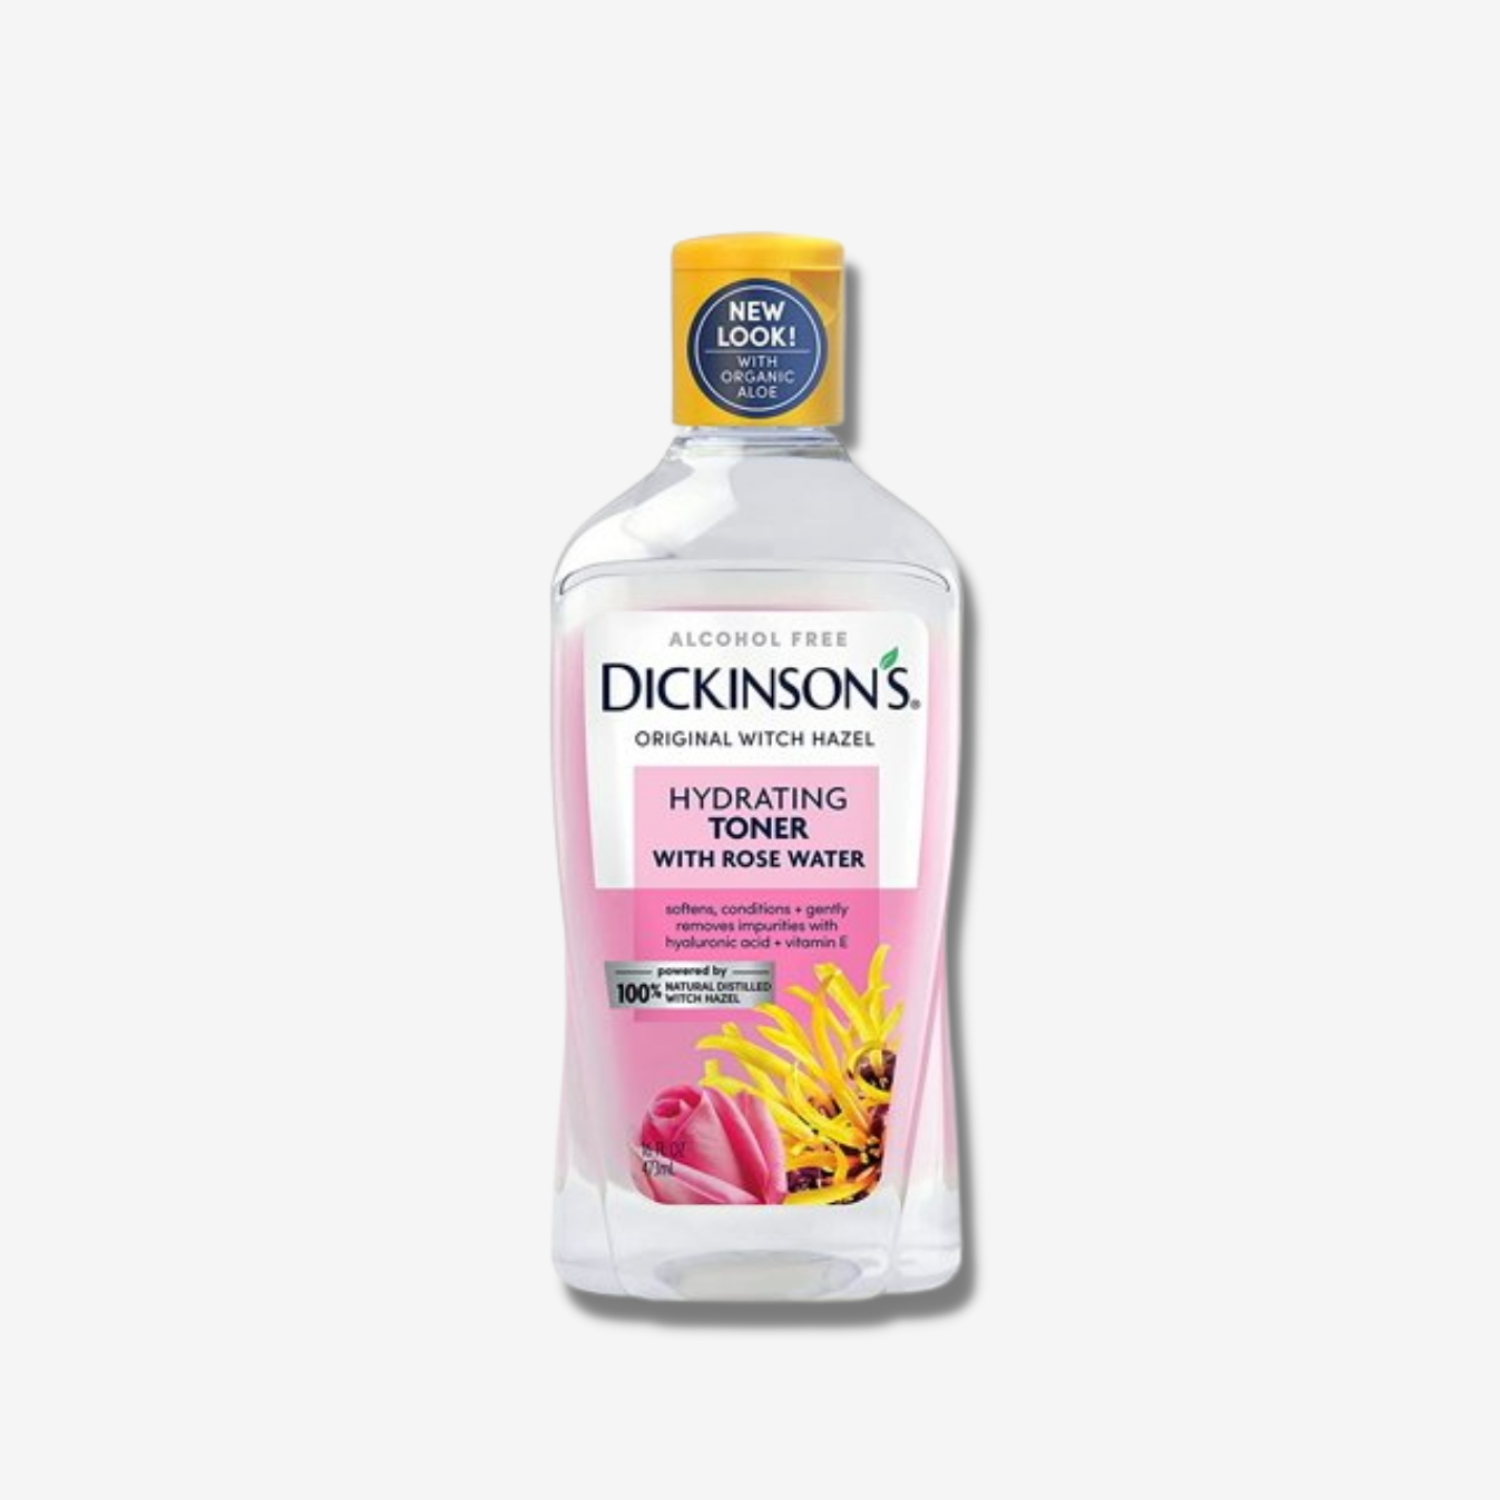 Dickinson's Hydrating Toner